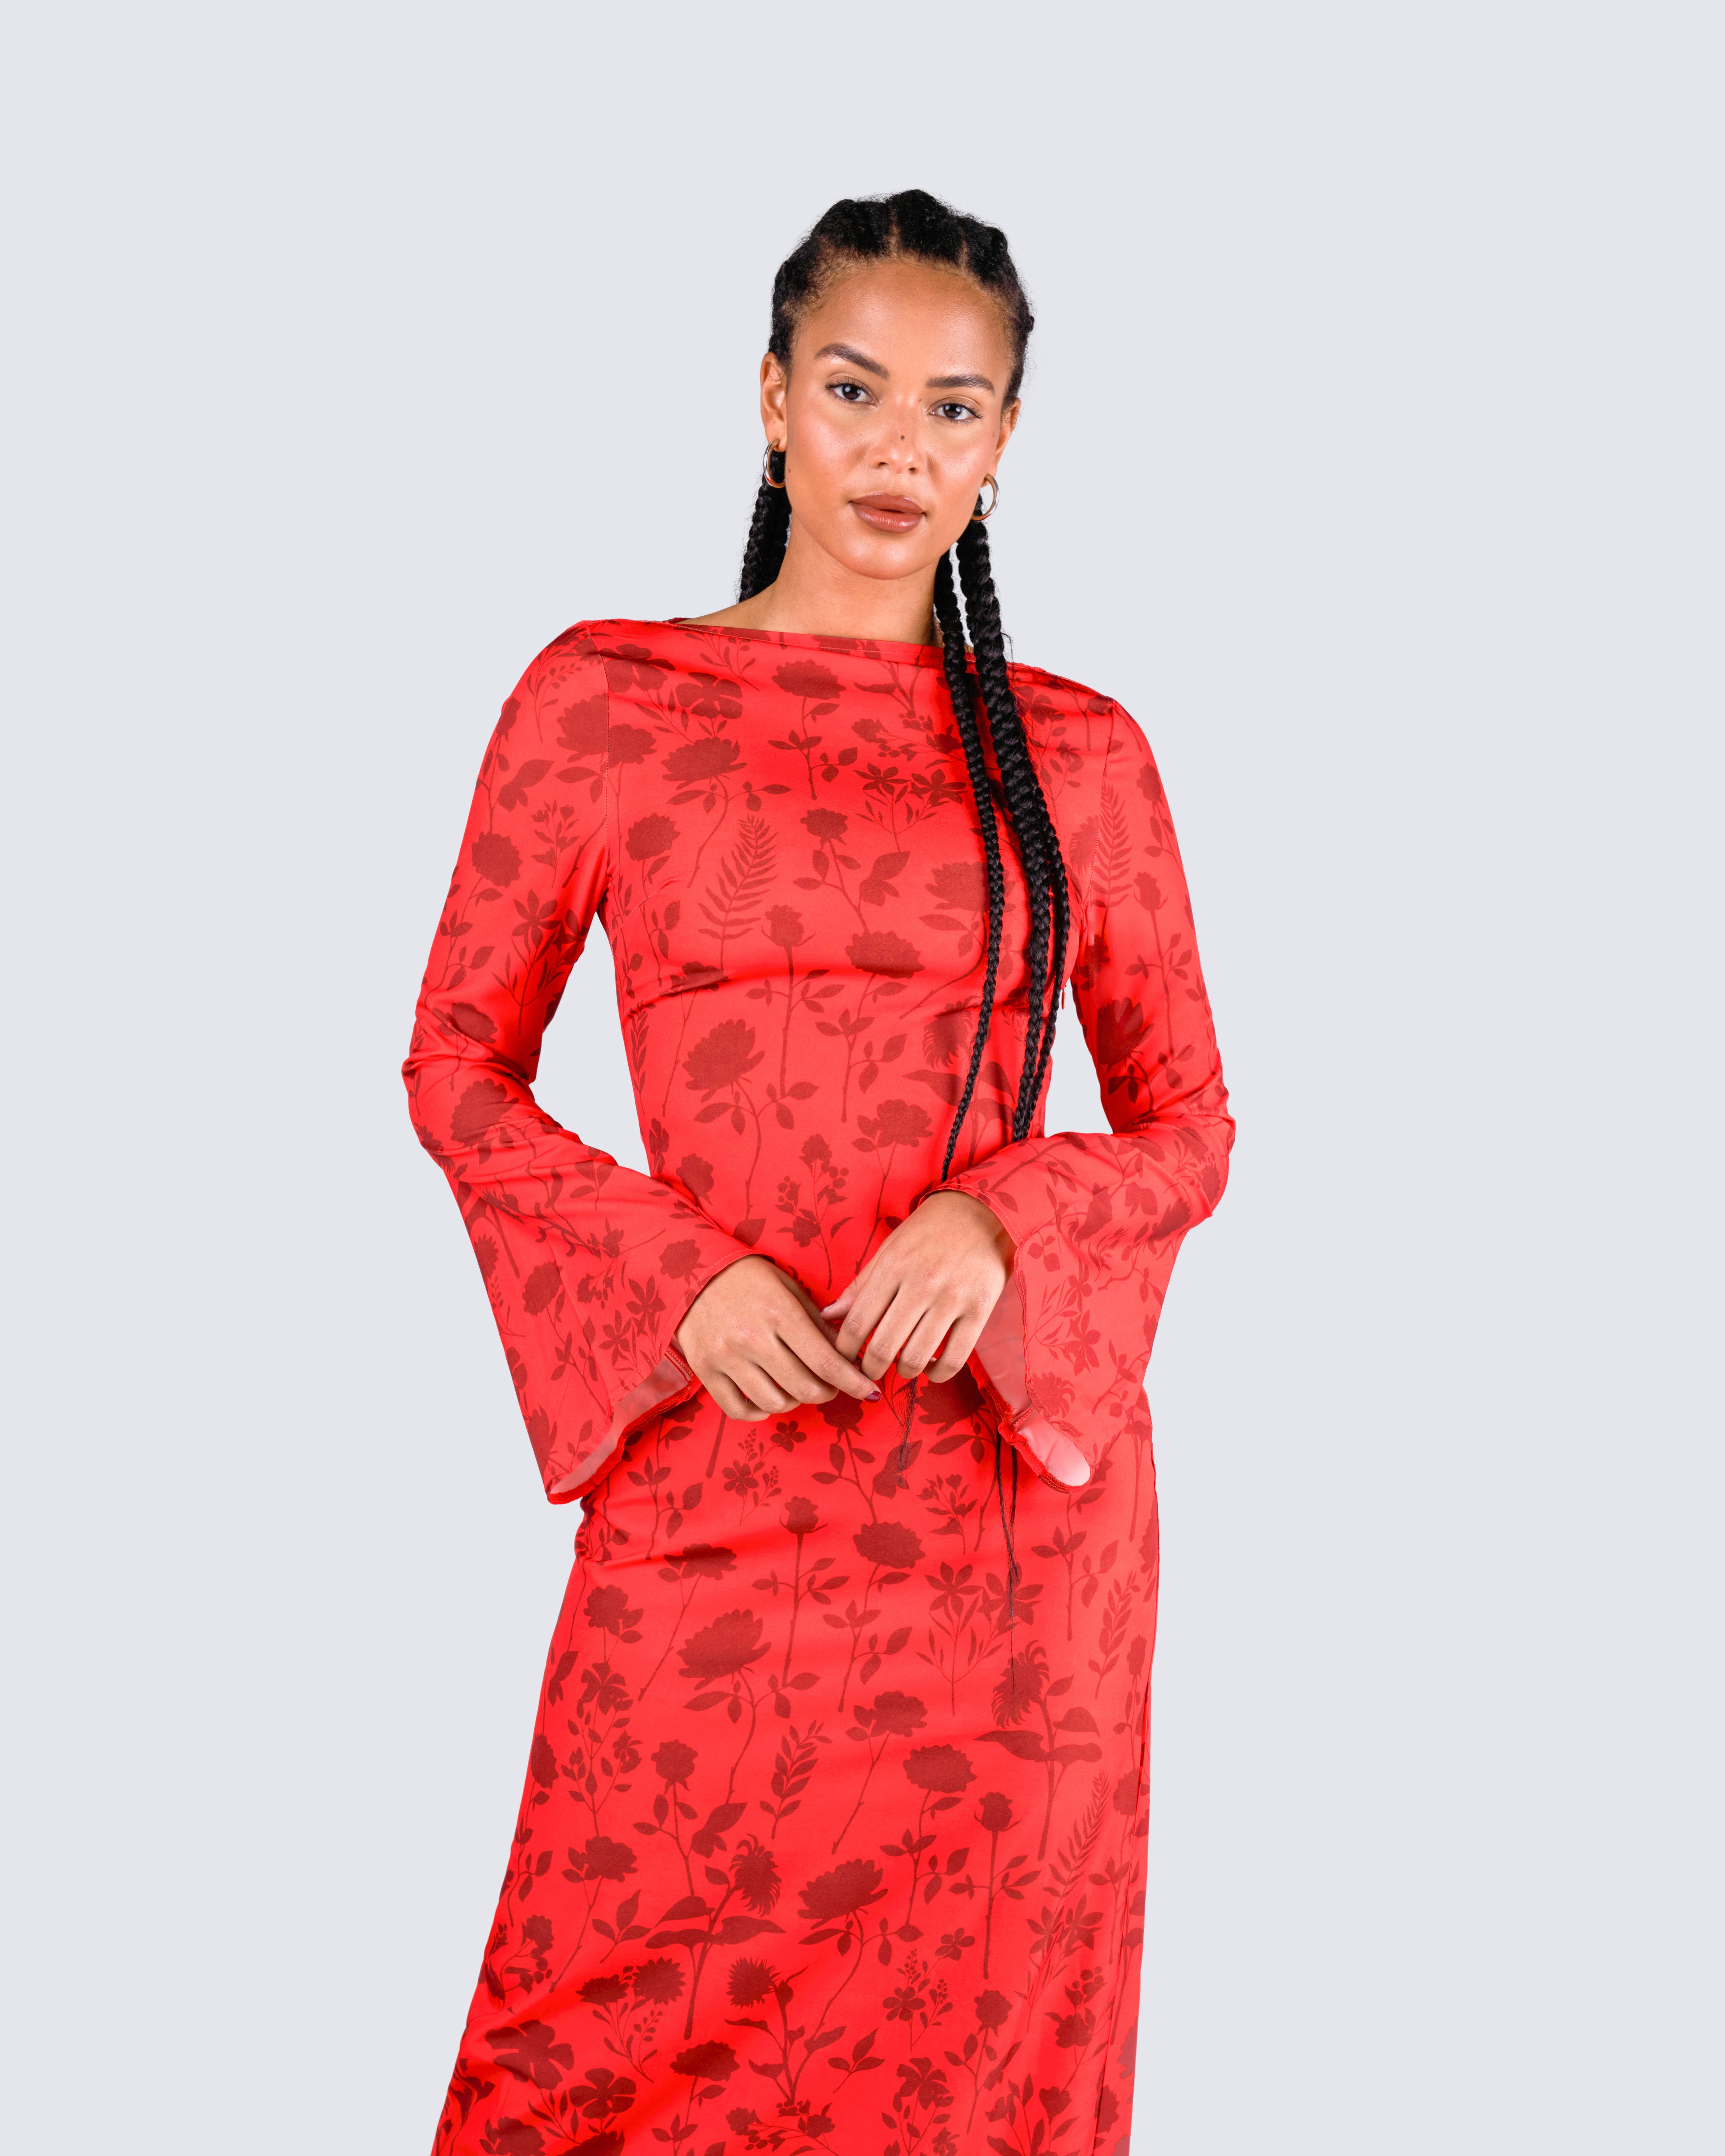 Coral Bright Flower Print Satin Long Dress – Aquarius Brand